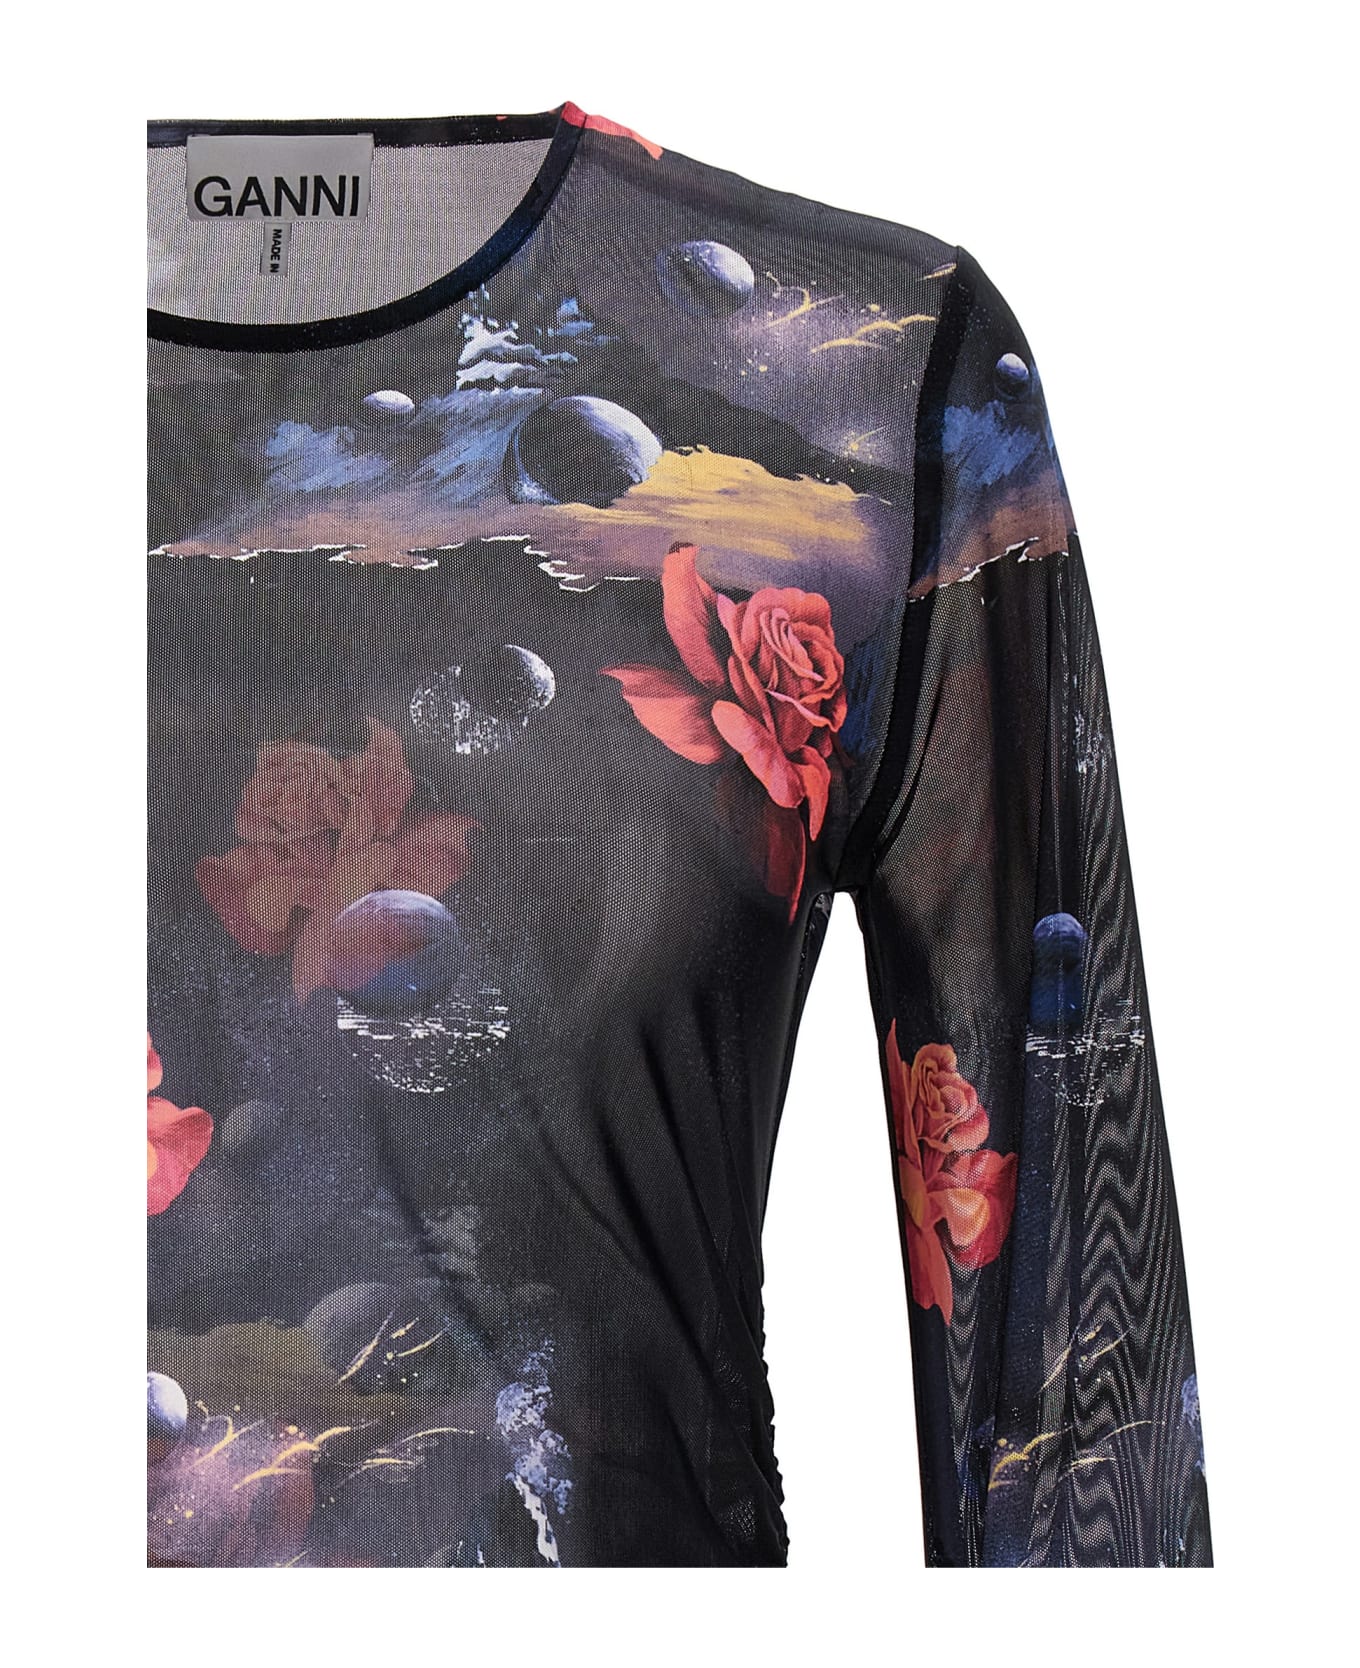 Ganni Floral Print Top - BLACK/PINK